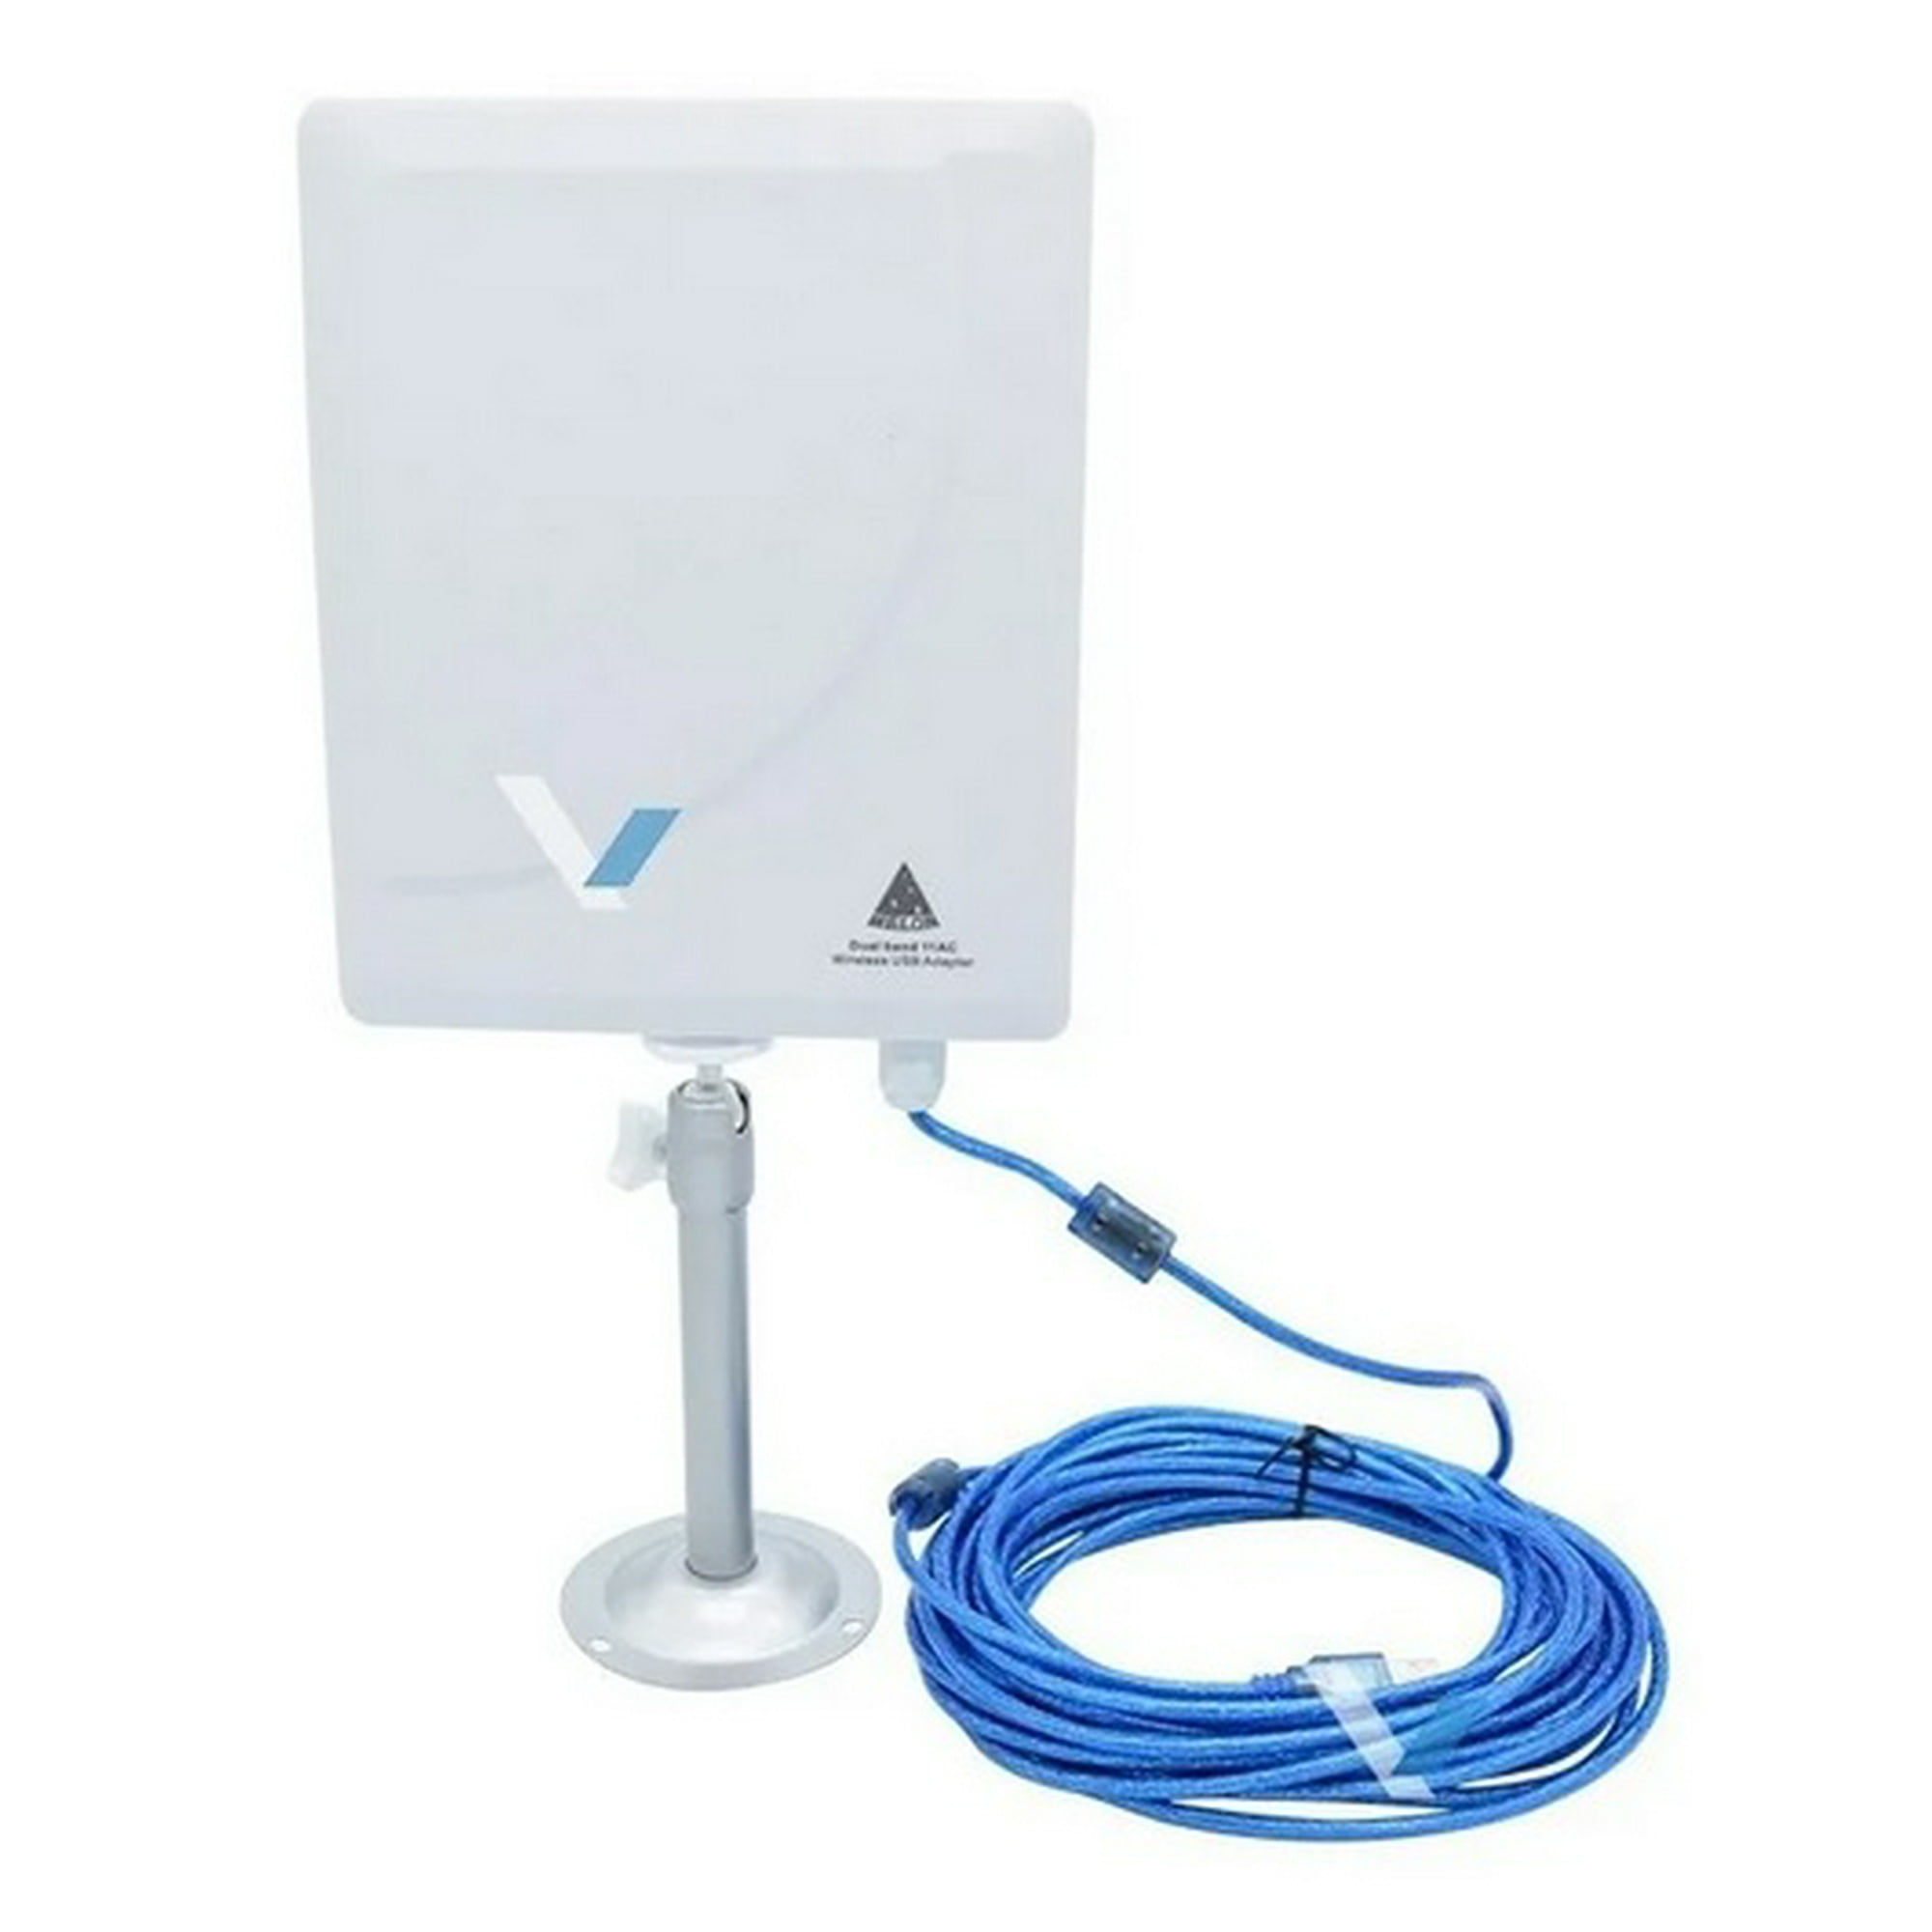 Antena Wifi largo alcance 36dbi 10 metros cable 2w USB con 10